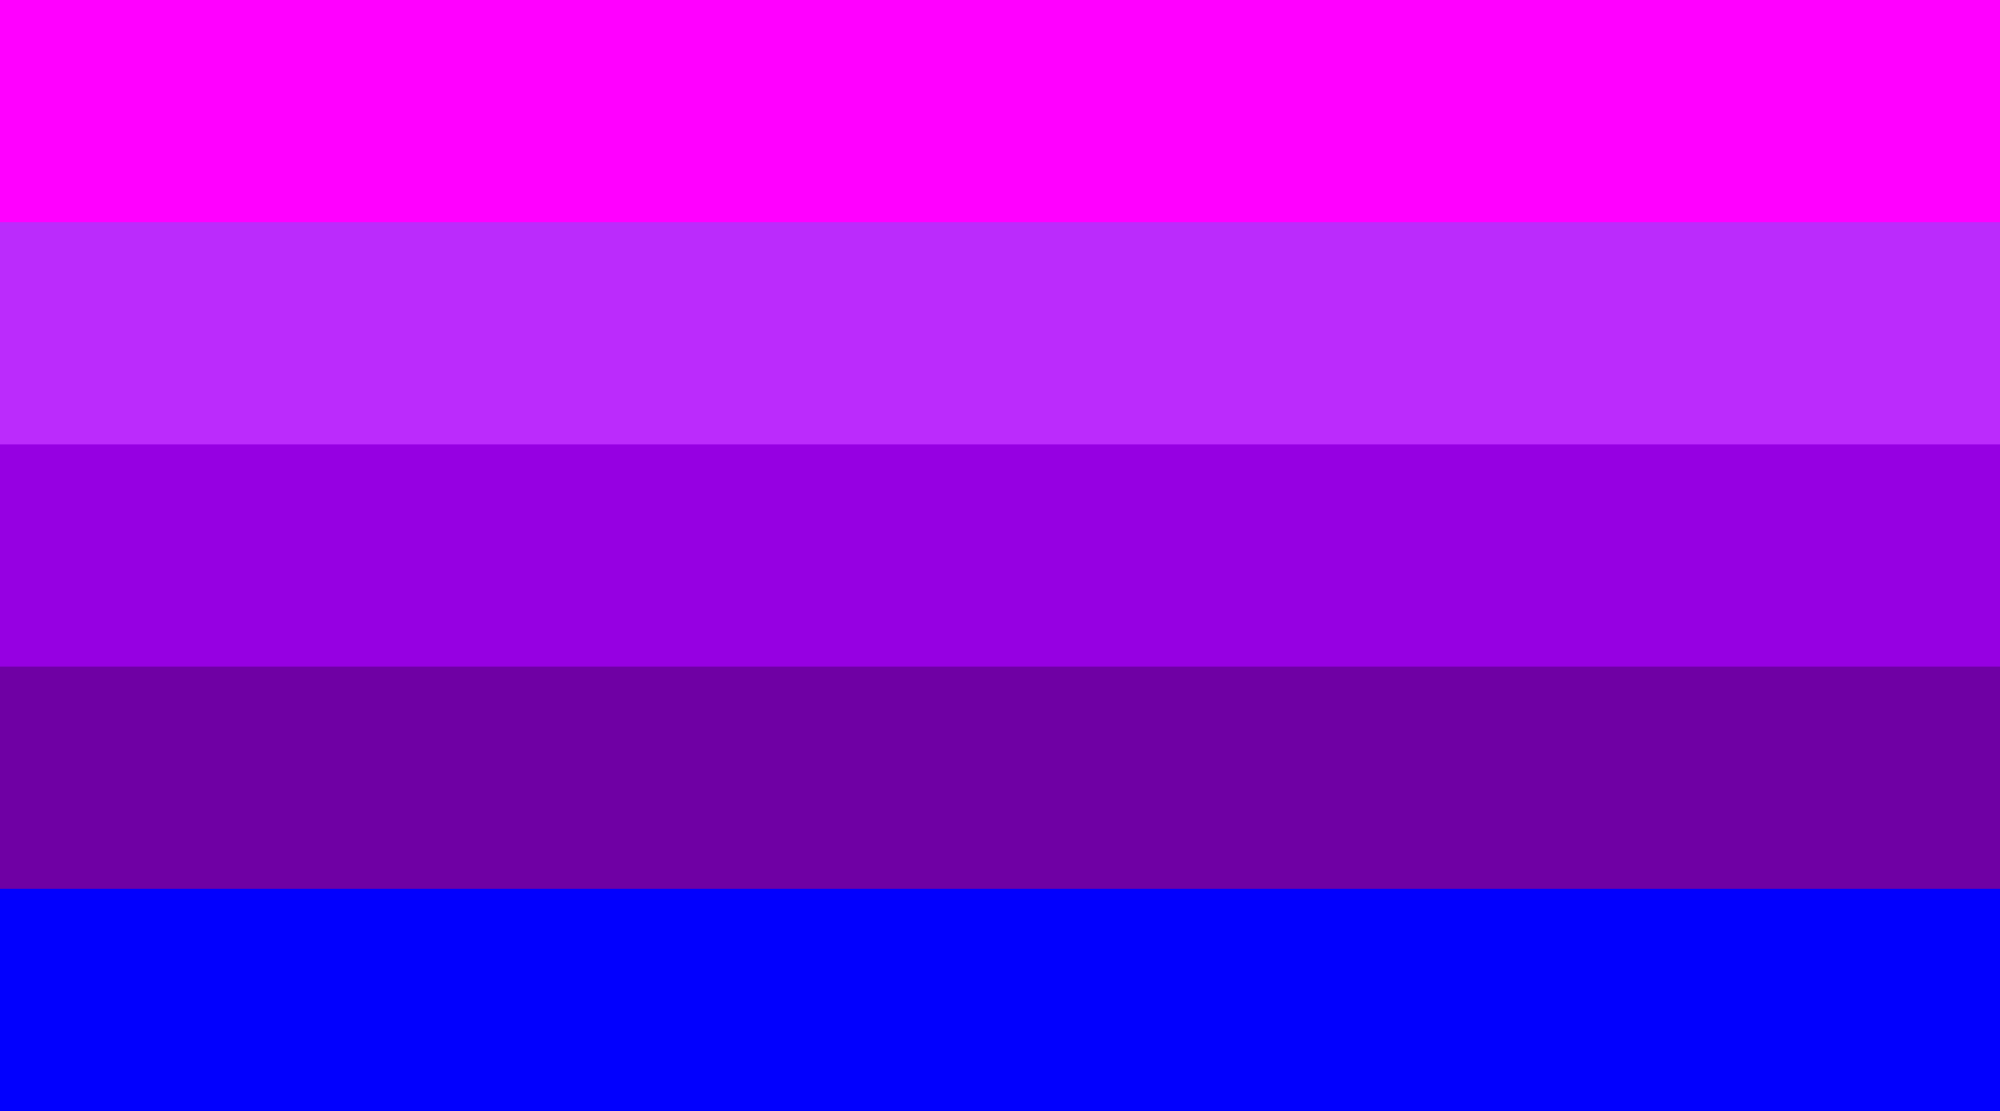 Jennifer Pellinen's public-domain transgender flag design. Image by AnotherOnymous, Public domain, from Wikimedia Commons.